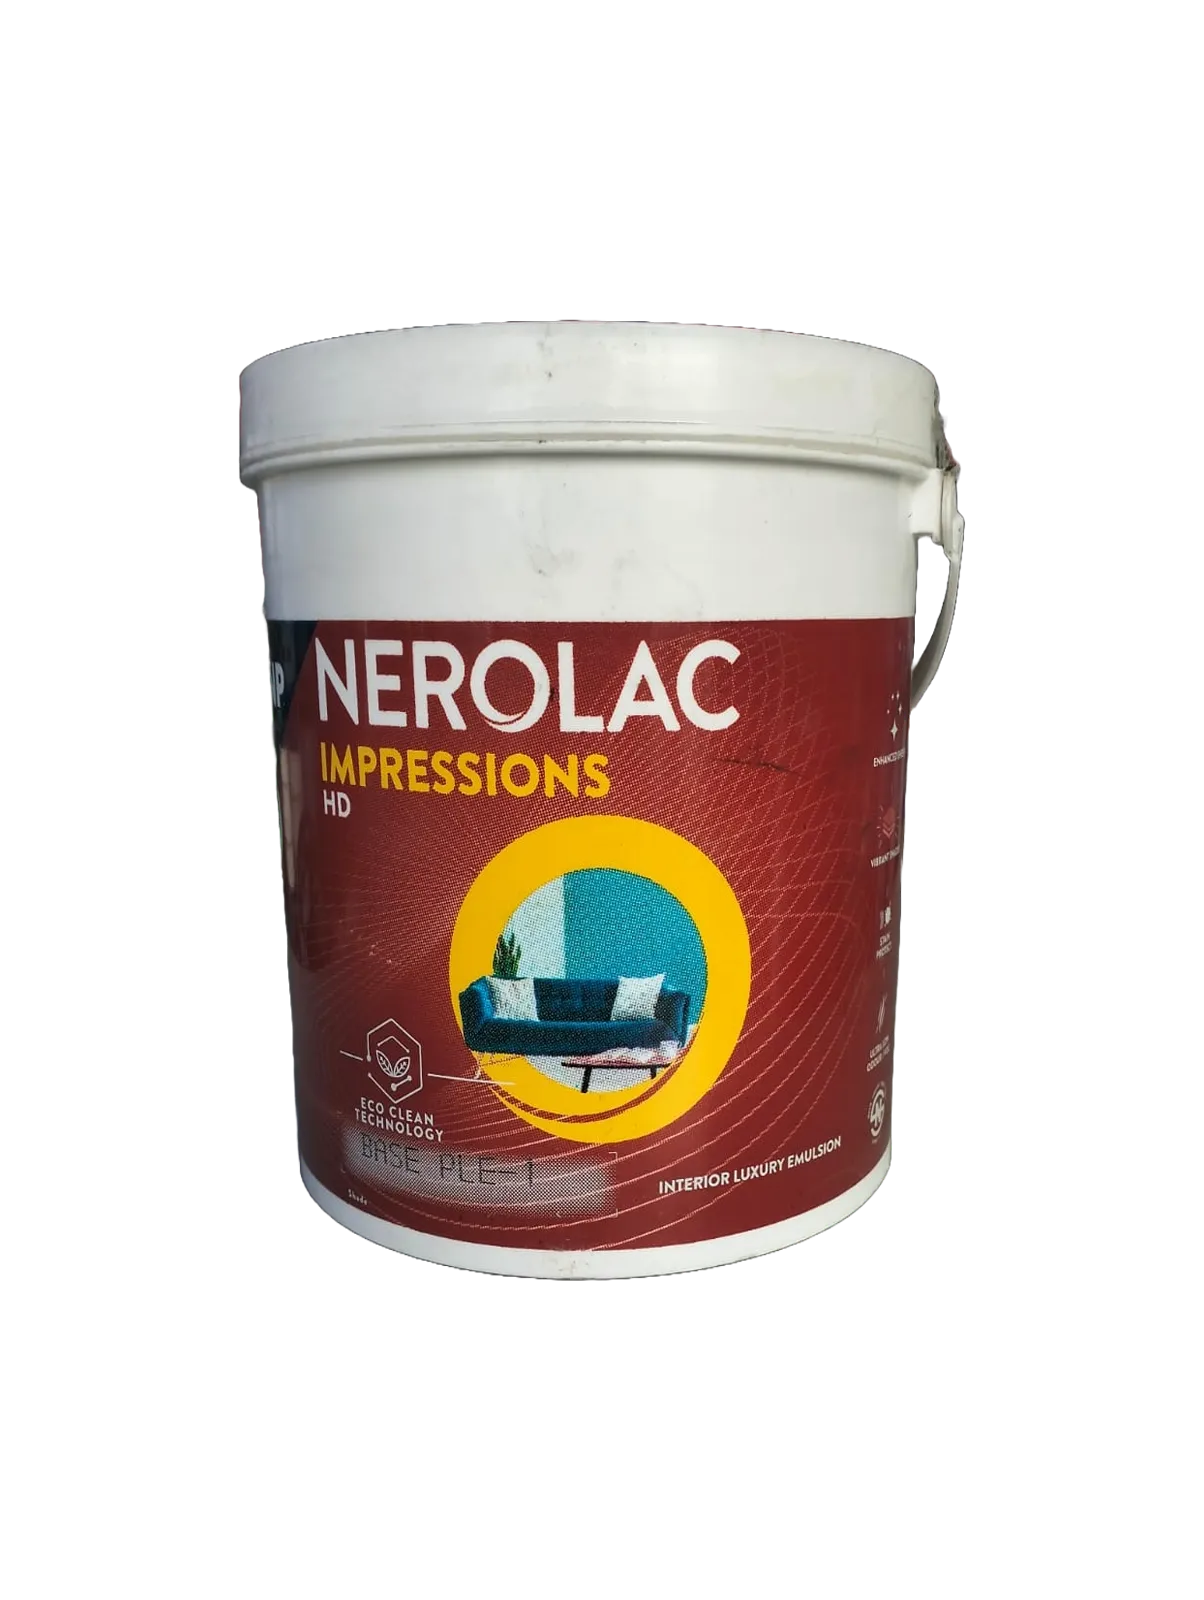 KNP Nerolac Impressions Interior Luxury Emulsion